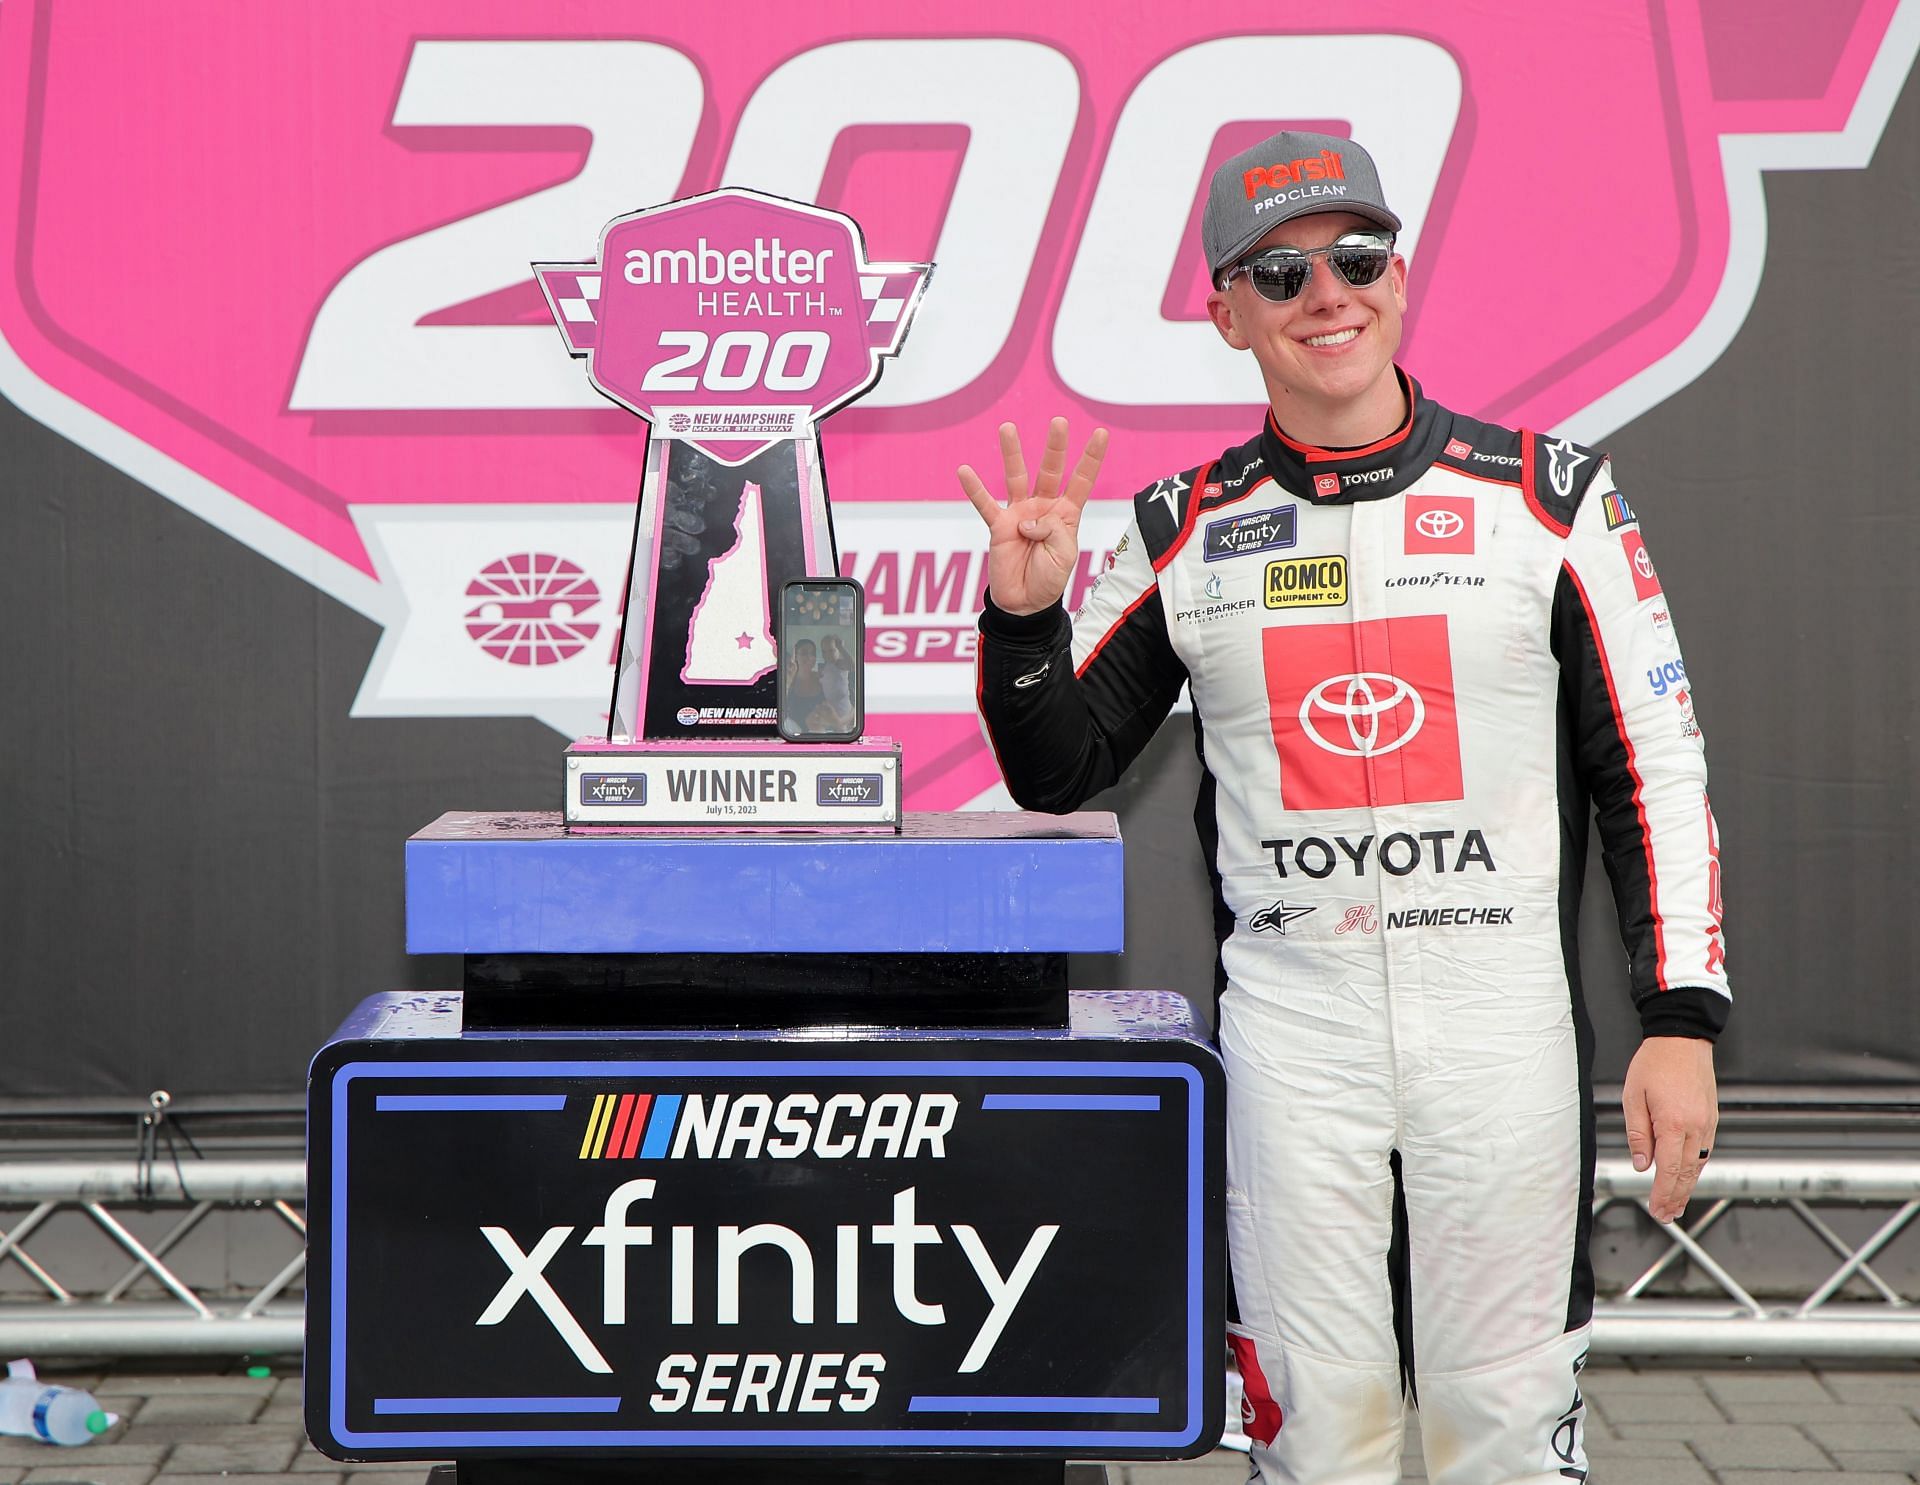 NASCAR Xfinity Series Ambetter Health 200